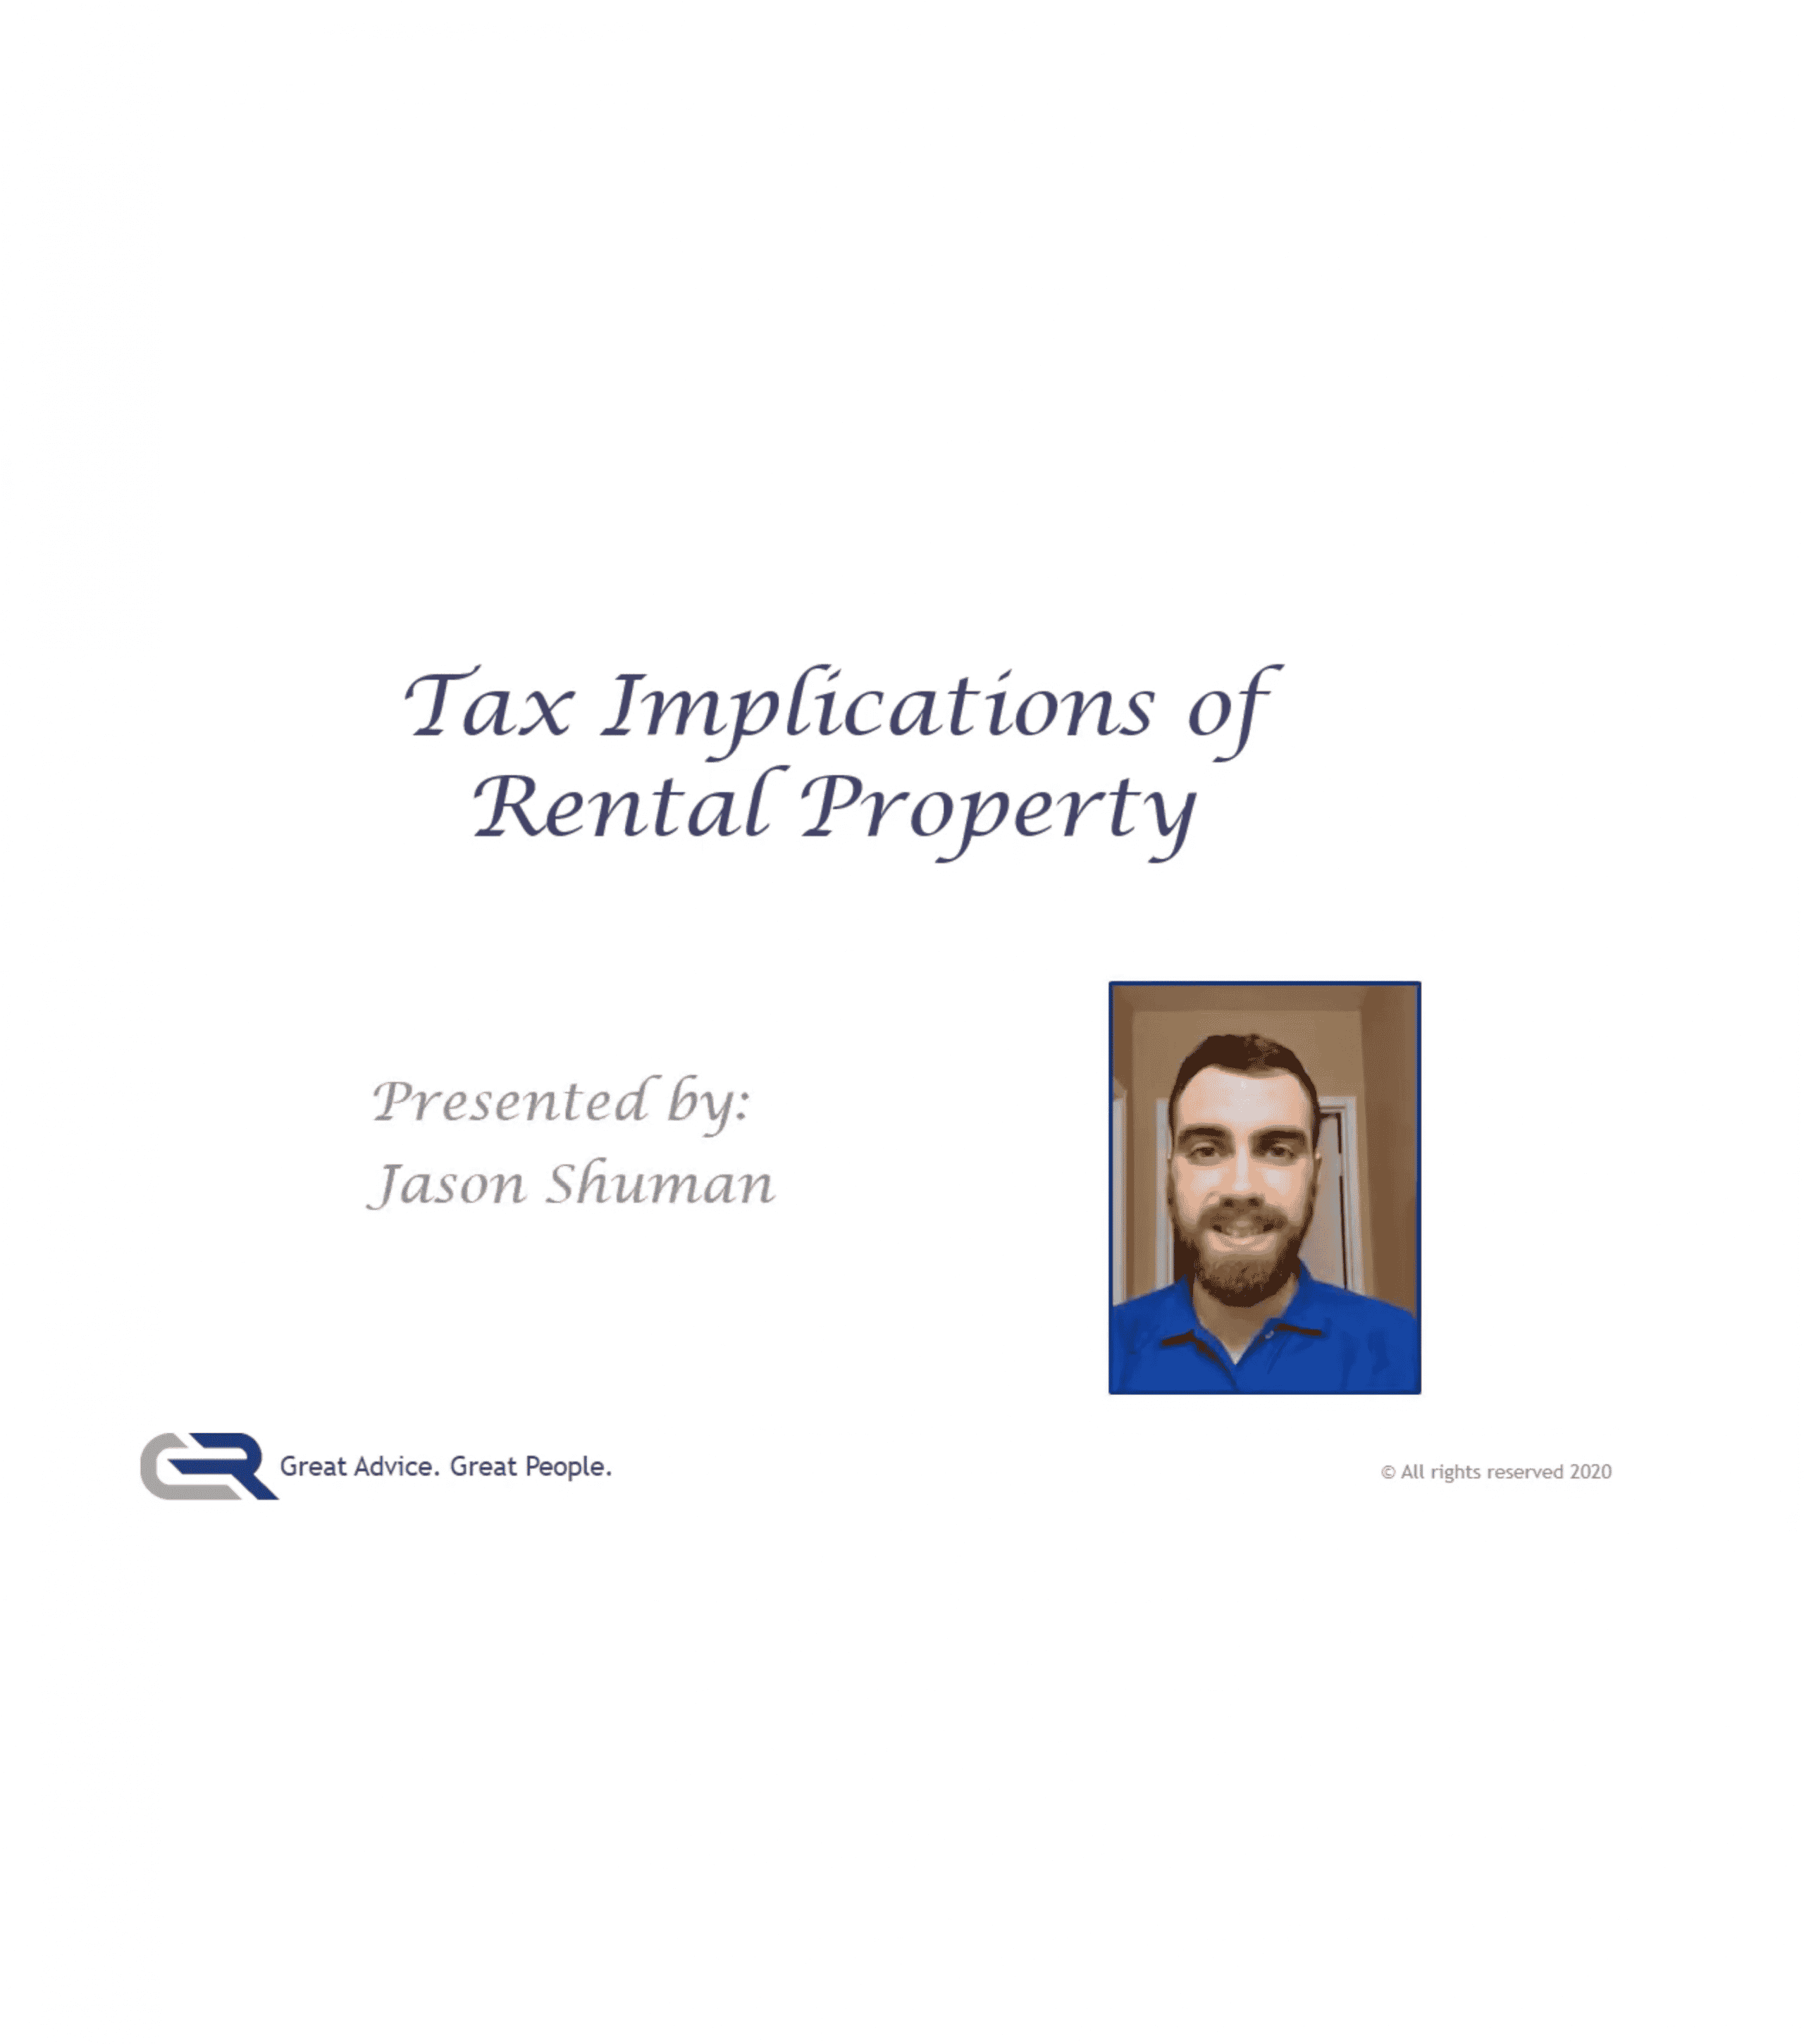 Tax Implications of Rental Property